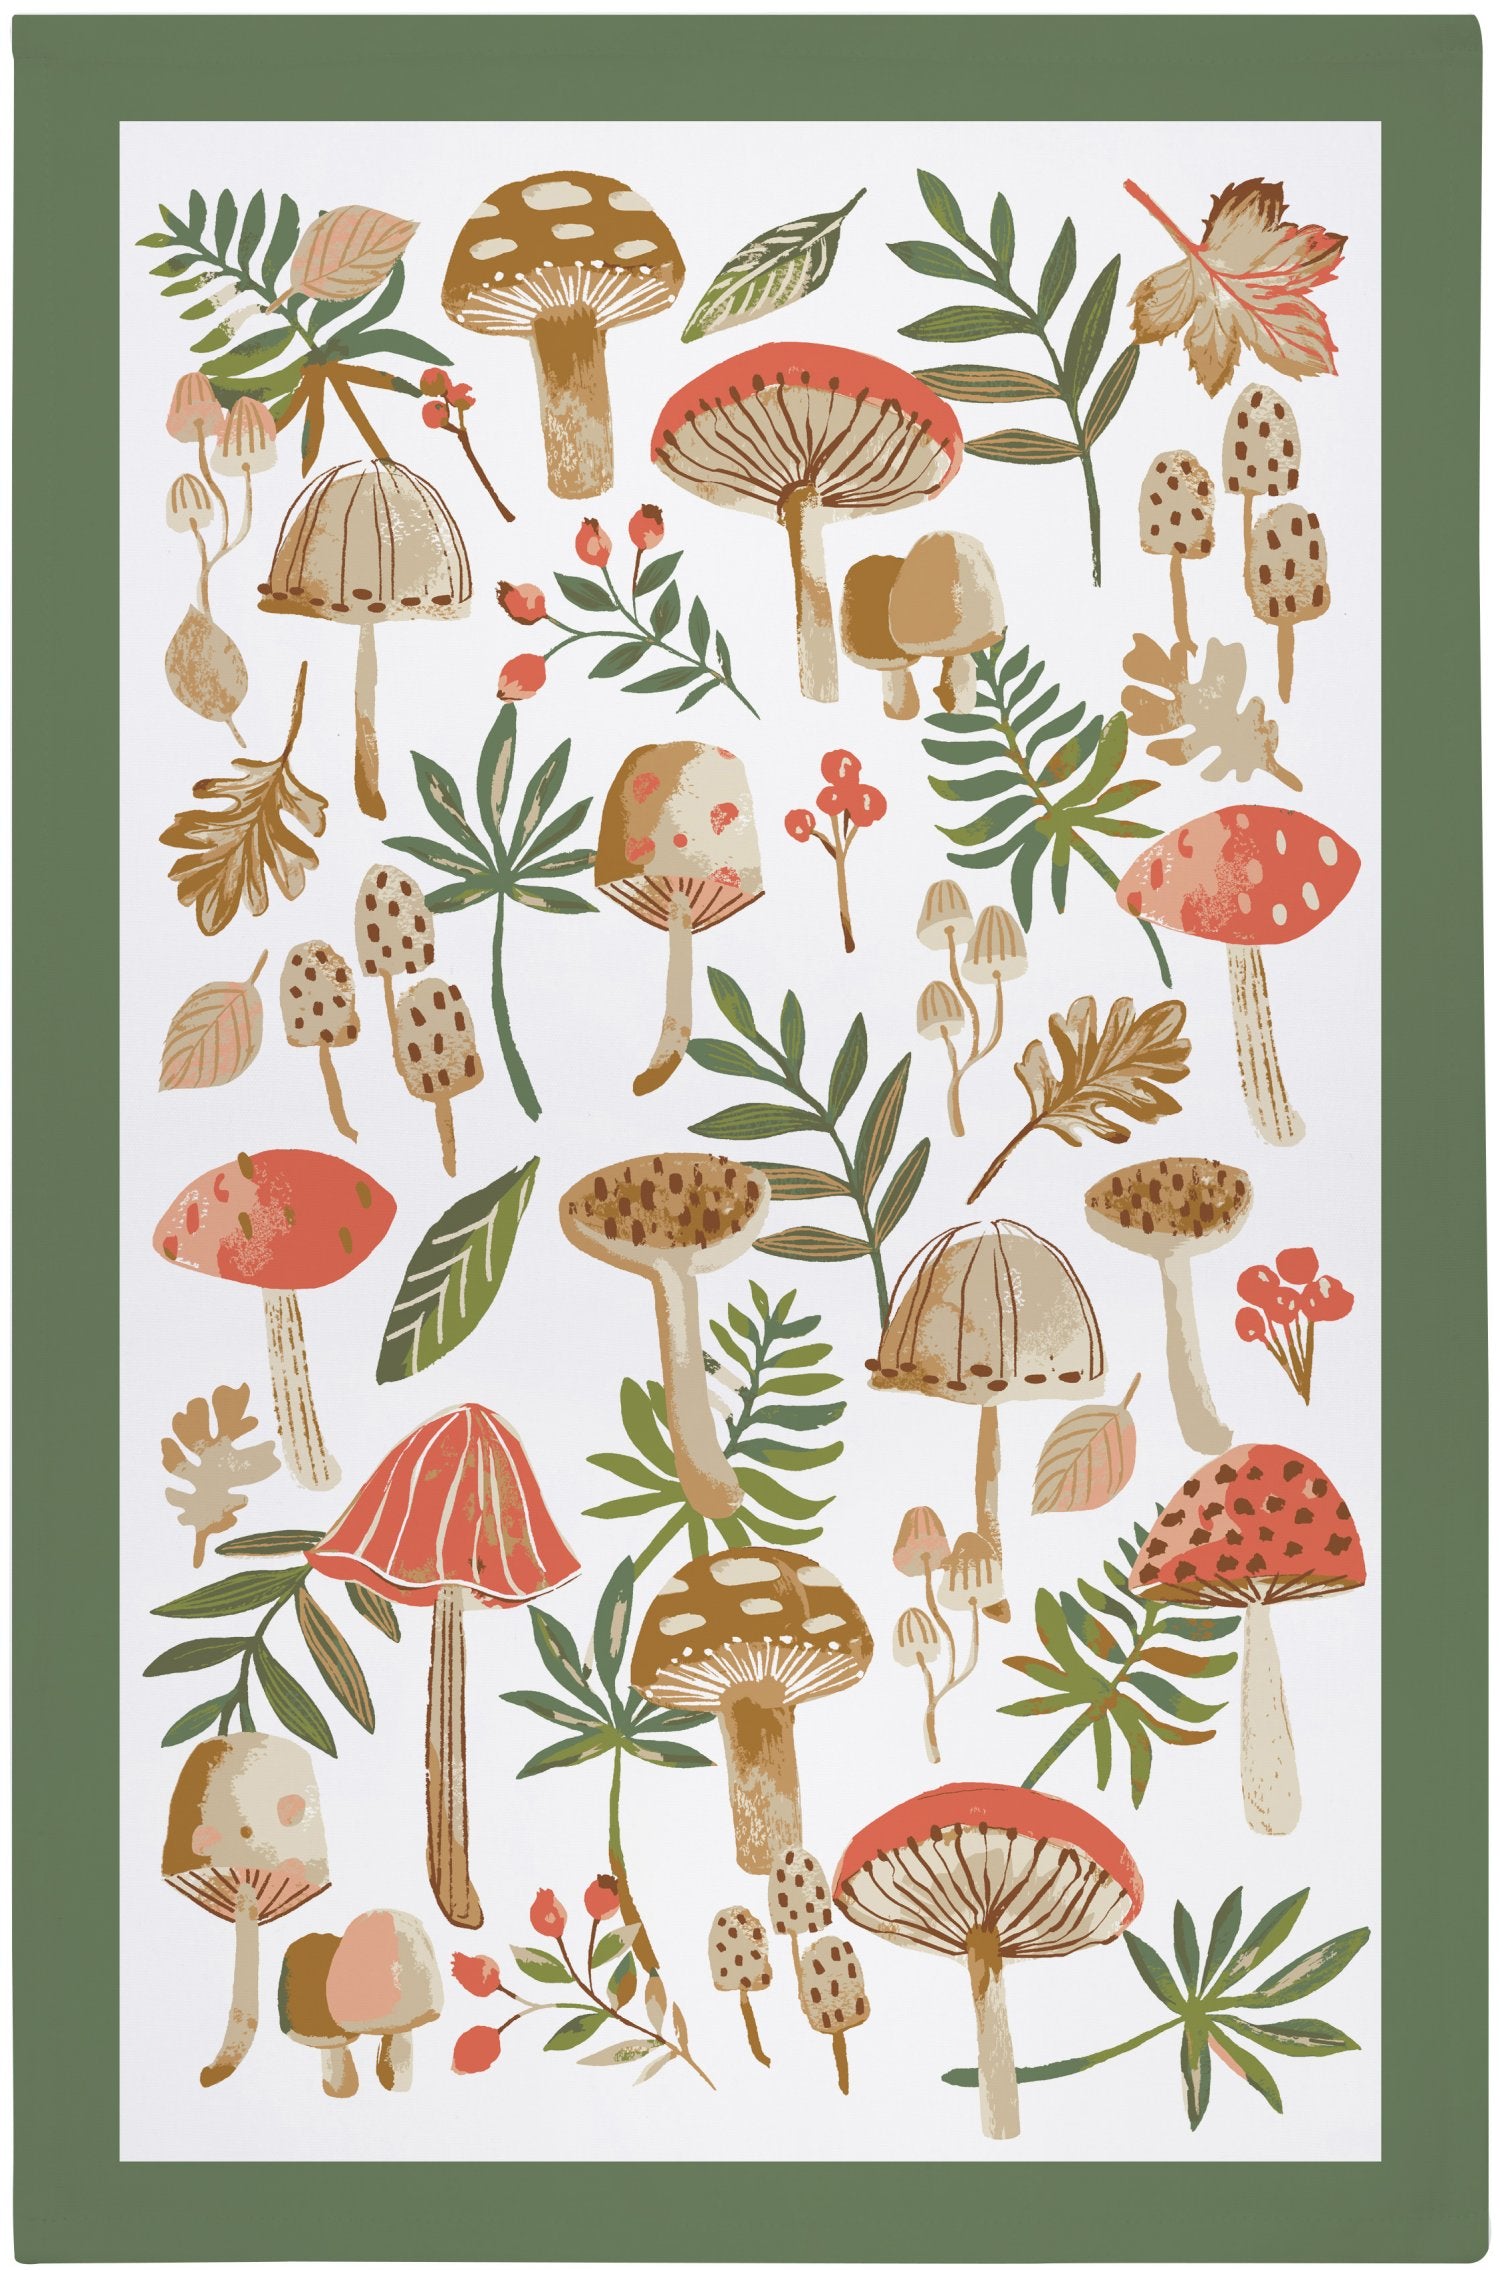 Ulster Weavers, "Mushrooms", Printed cotton tea towel.